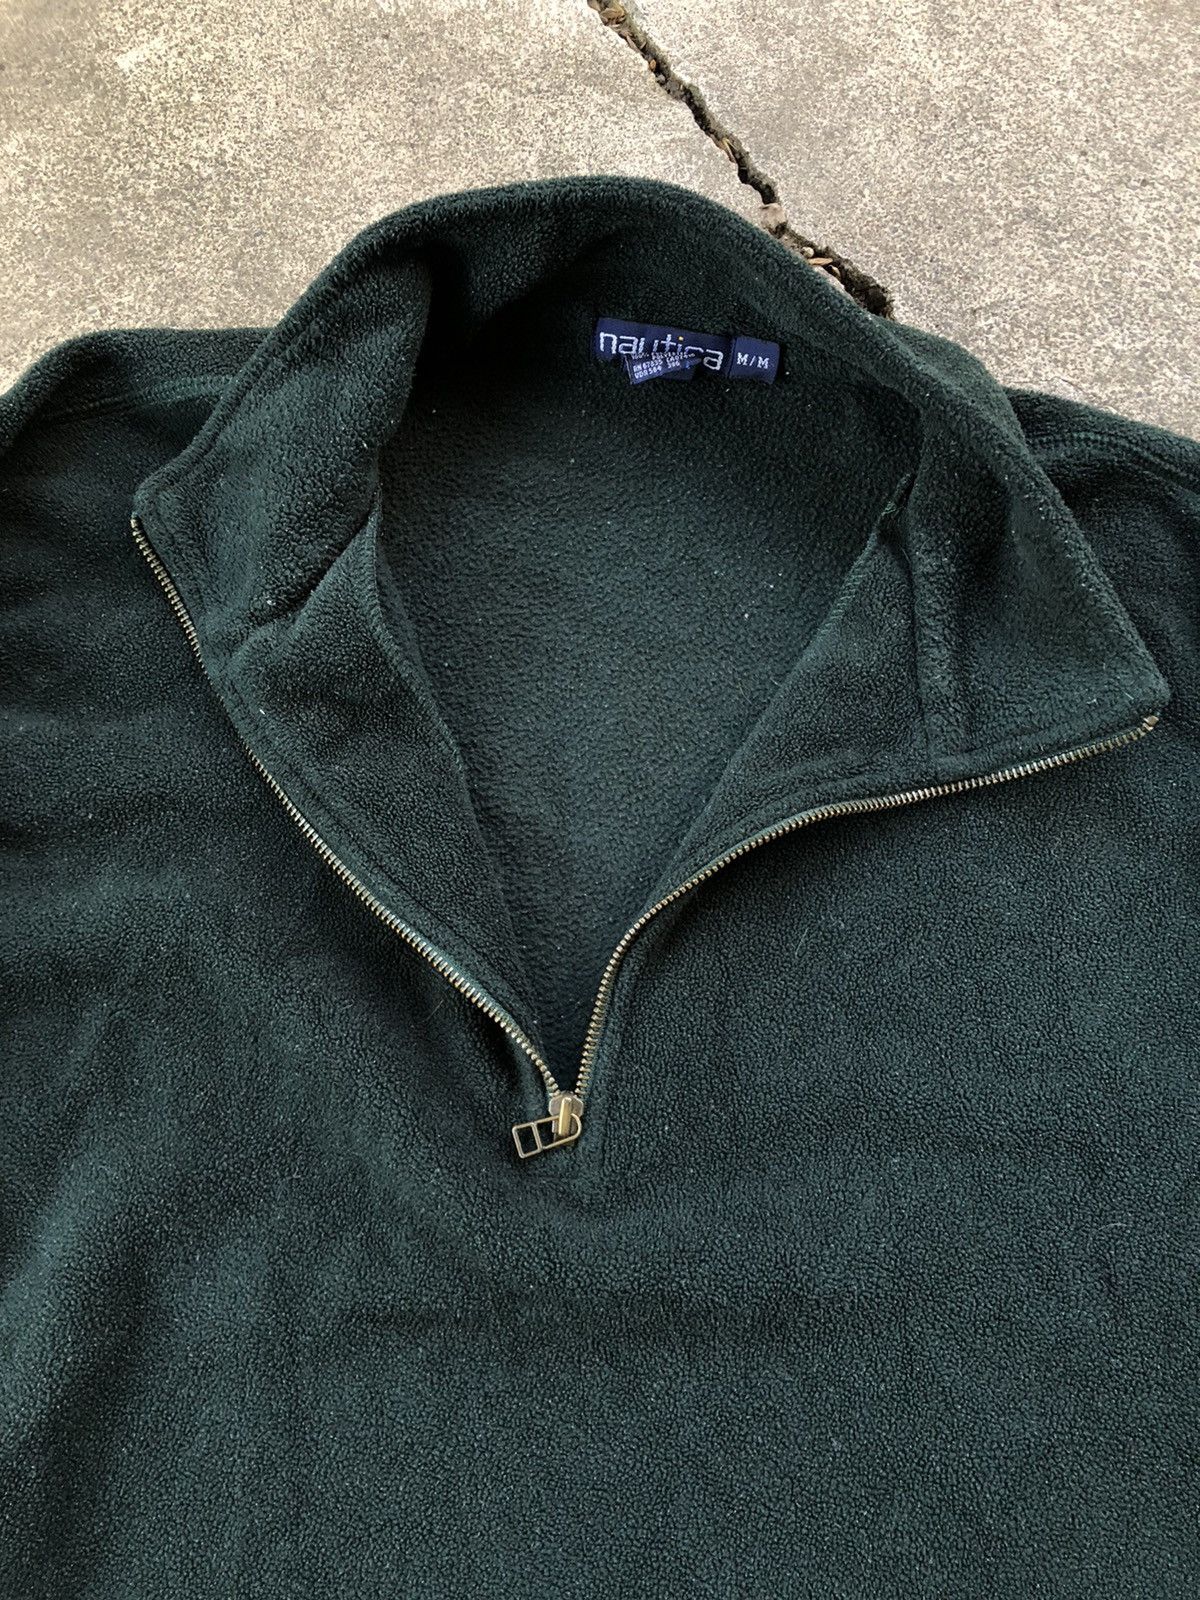 Vintage Nautica Fleece Pullover Sweatshirt Size US M / EU 48-50 / 2 - 3 Preview